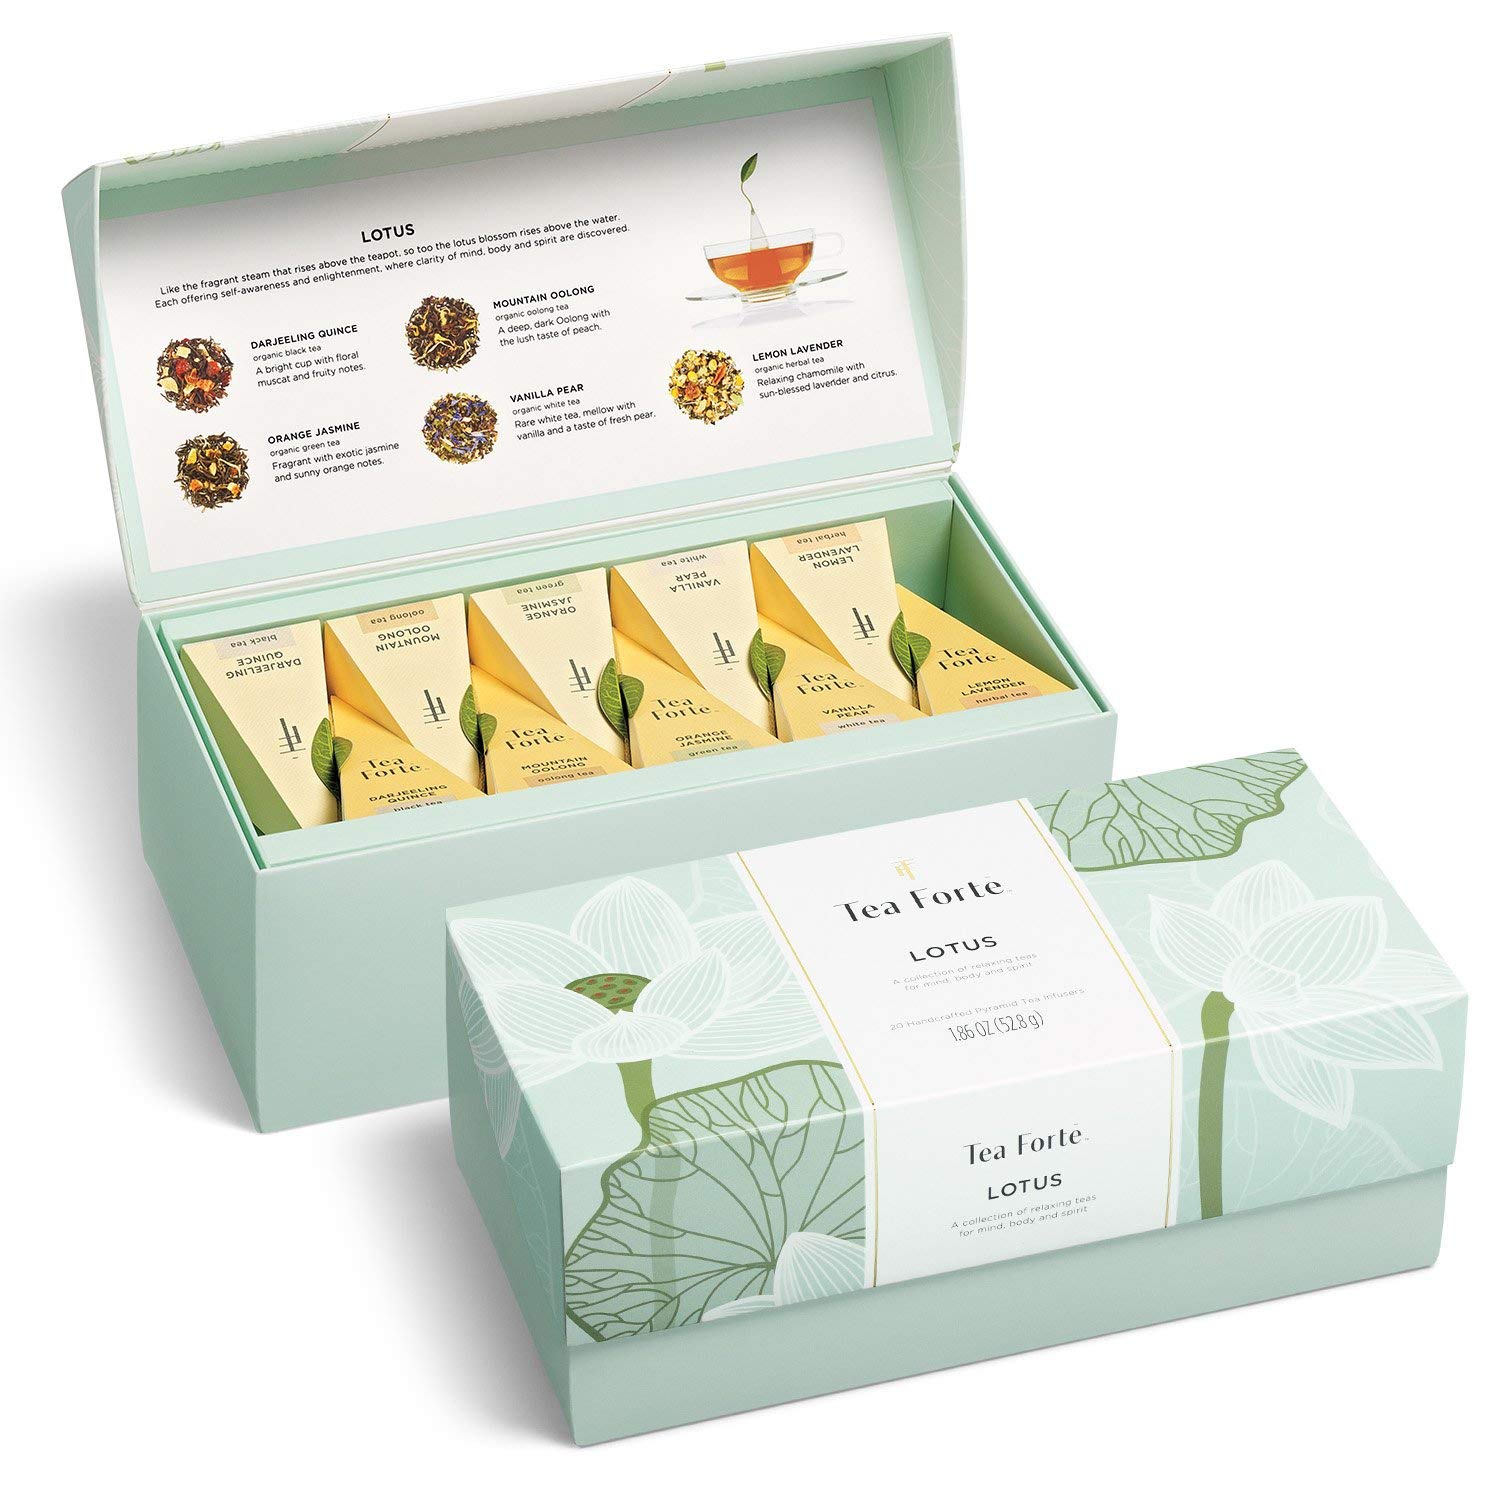 Tea Forte Lotus Relaxing Teas Presentation Box Tea Sampler Gift Set, 20 Assorted Variety Handcrafted Pyramid Tea Infuser Bags, Black Tea, Green Tea, Oolong Tea, White Tea, Herbal Tea